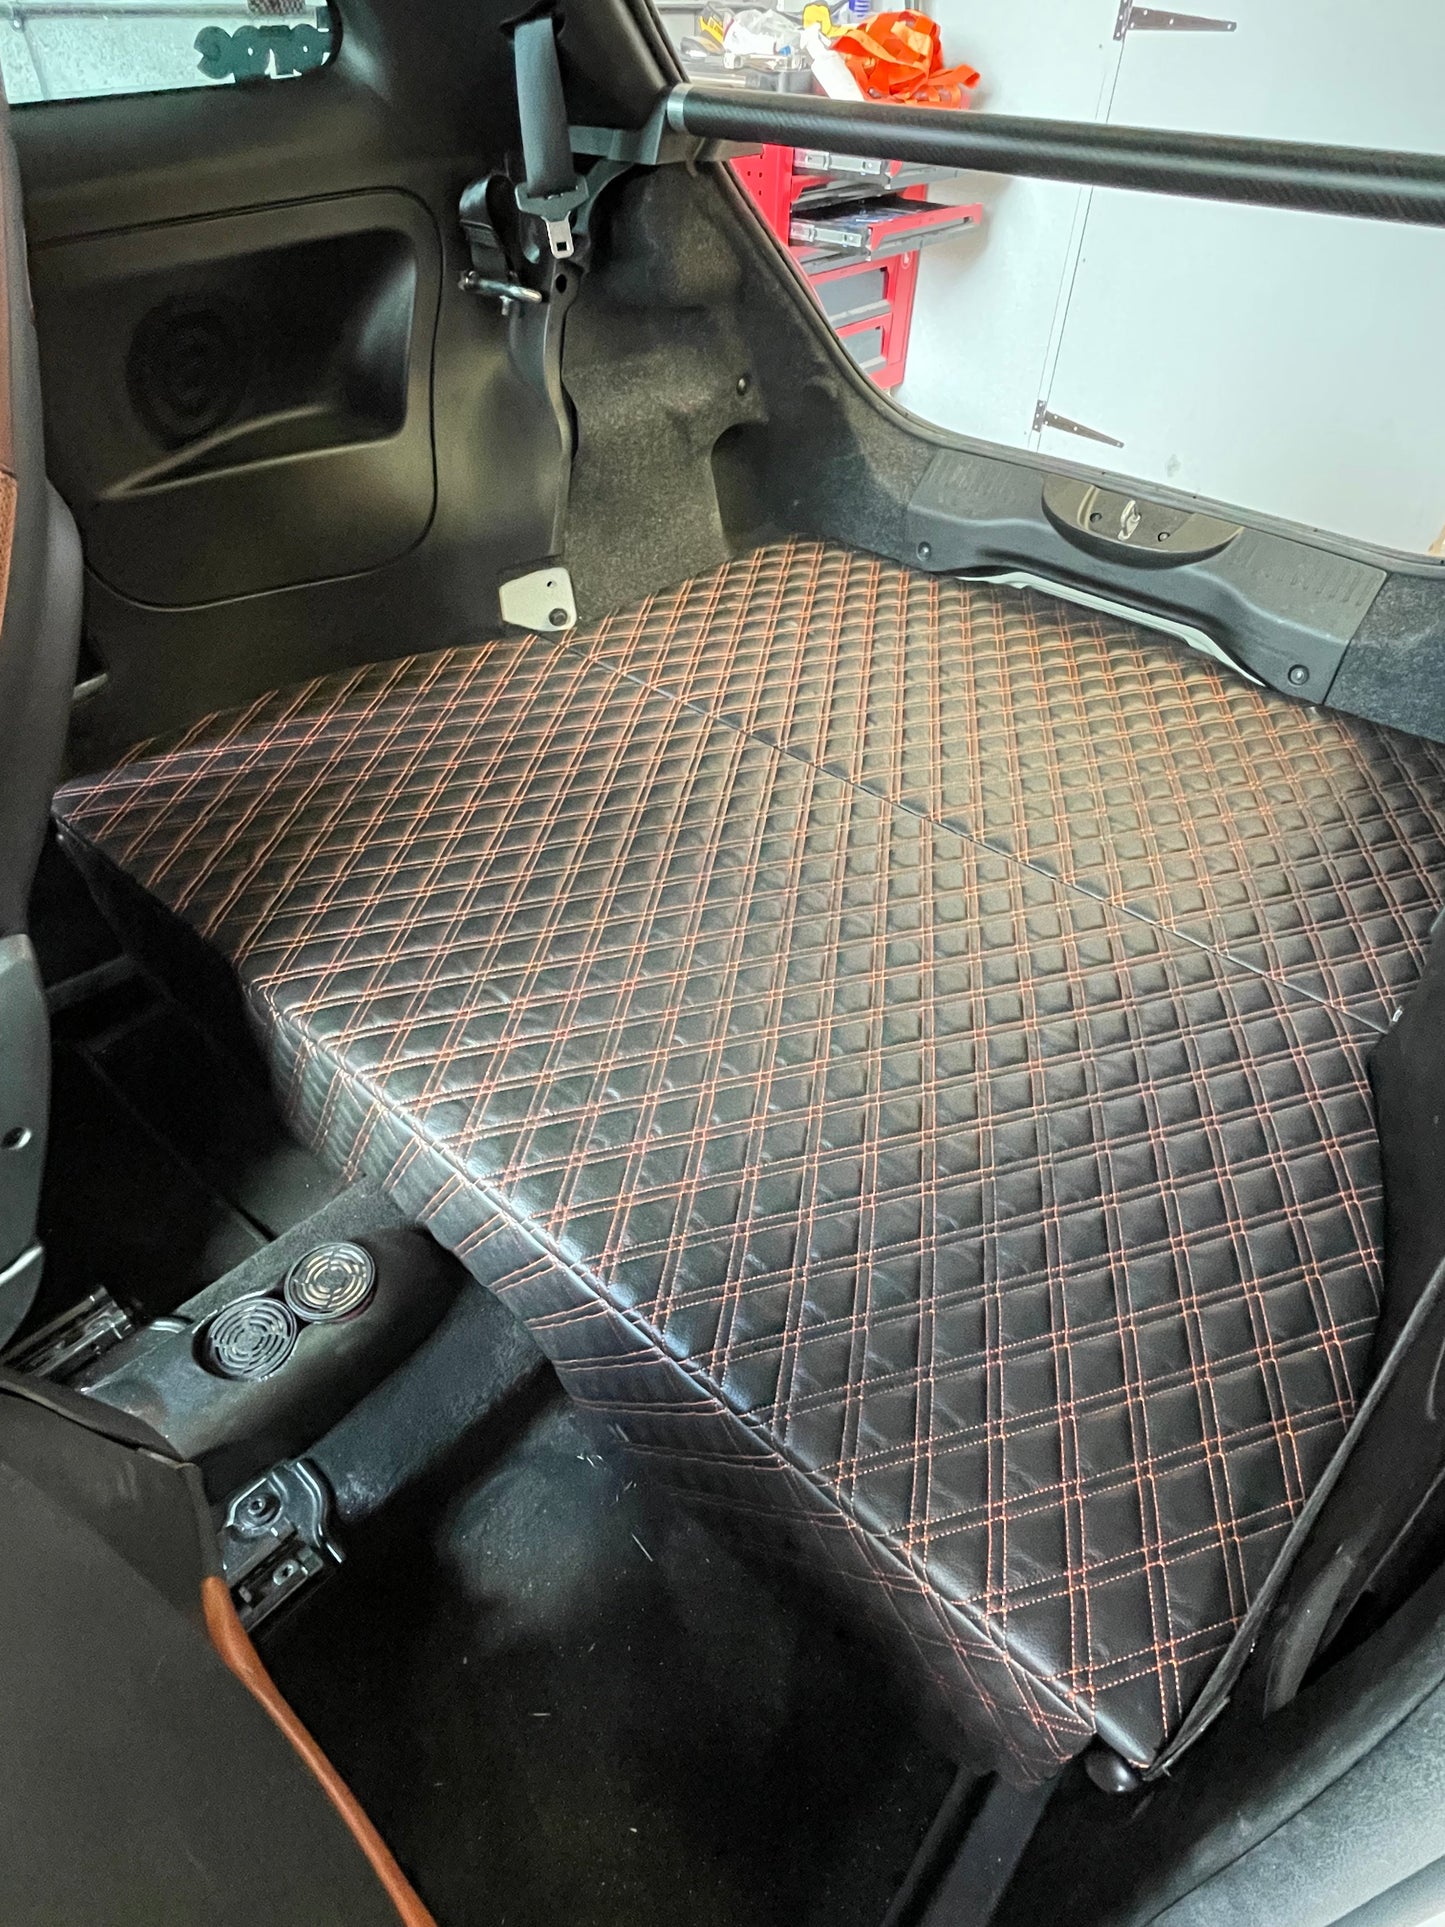 TMC Motorsport Luxury Complete Rear Seat Delete Kit for Abarth 500/595/695